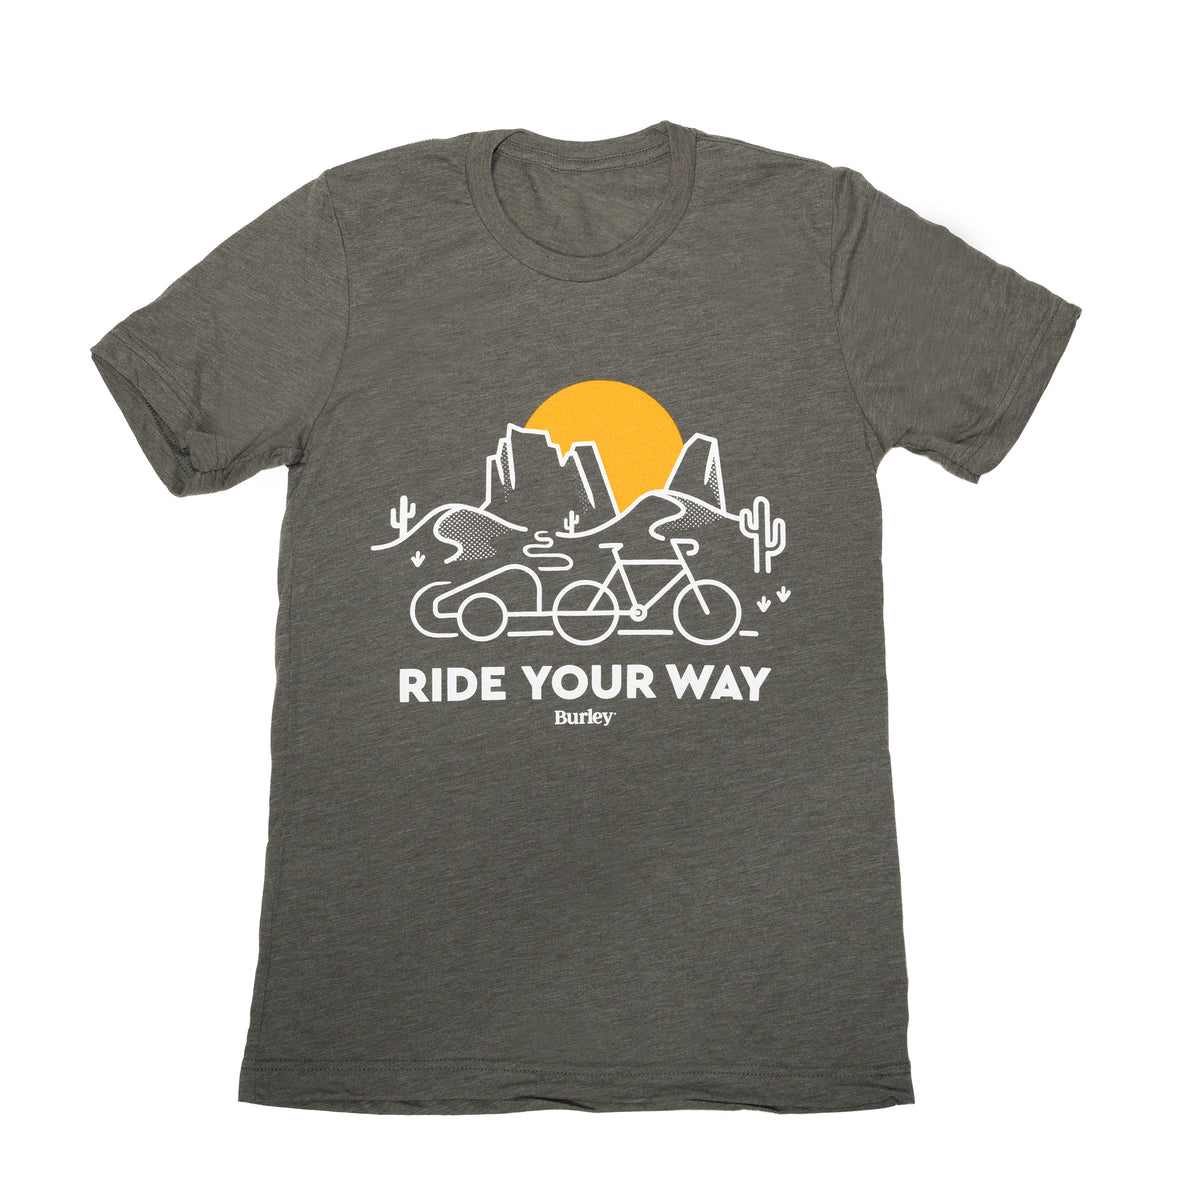 Burley Ride Your Way Shirt, Cargo Trailer, Green